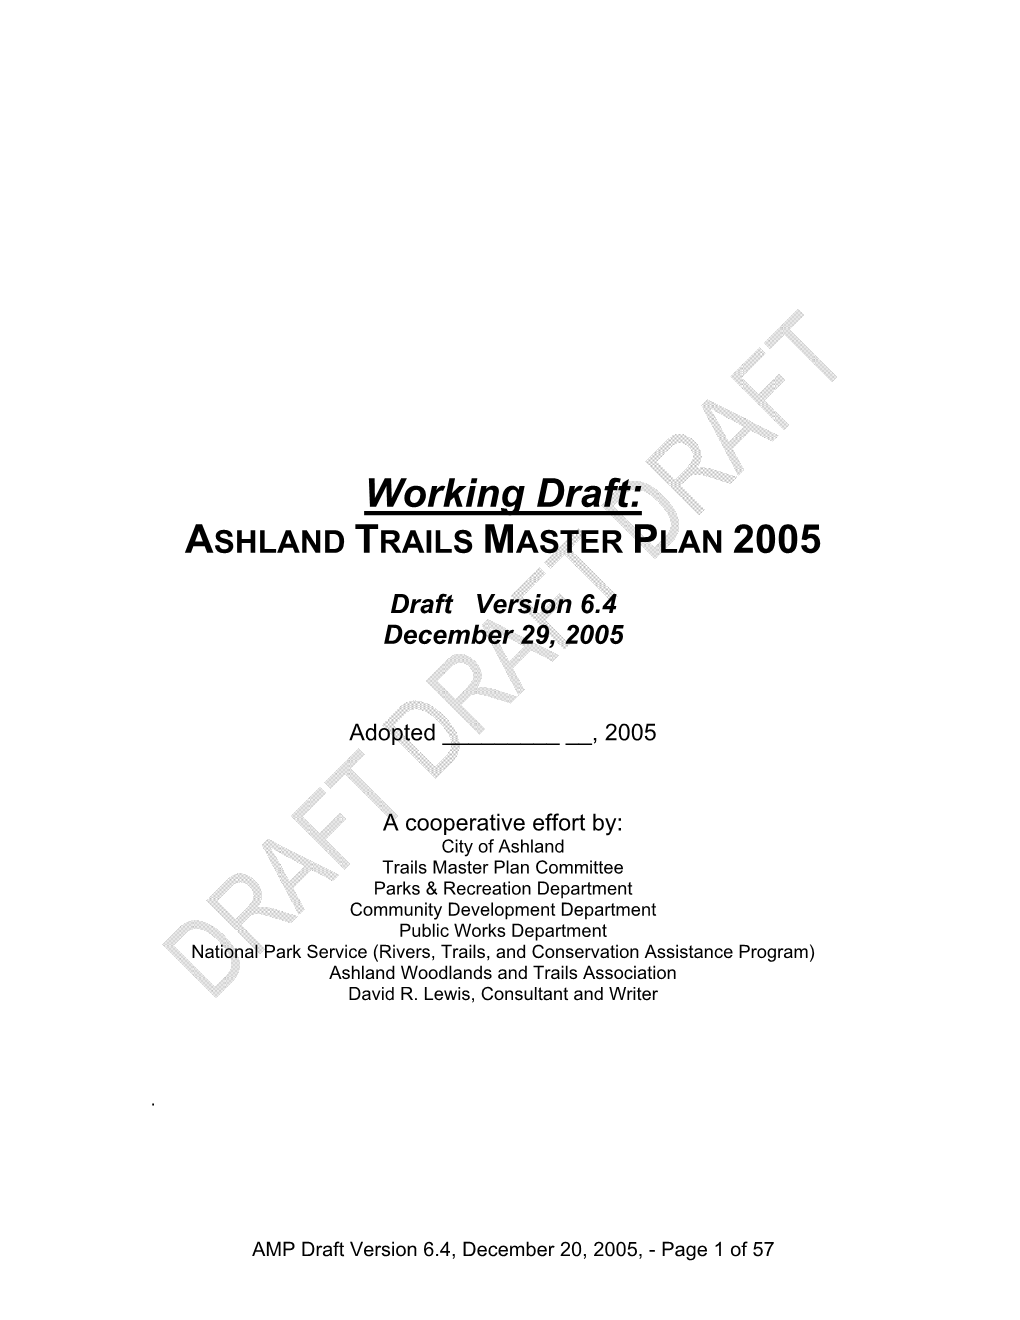 Working Draft: ASHLAND TRAILS MASTER PLAN 2005